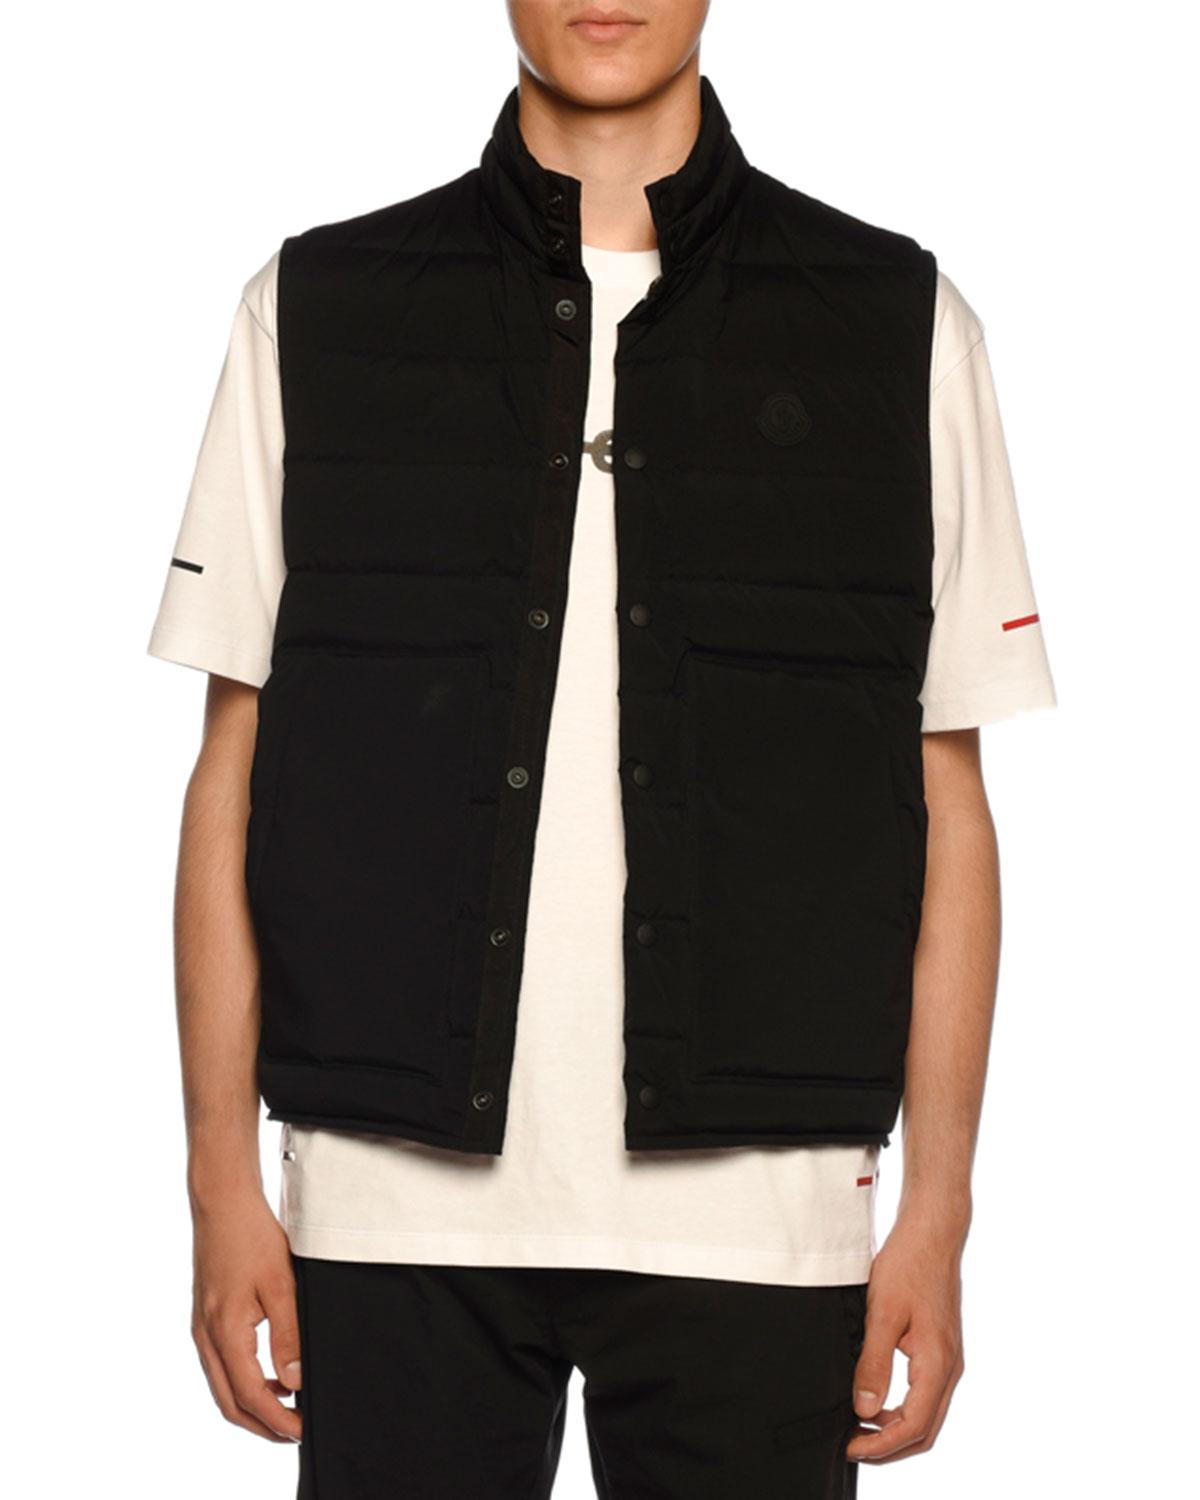 Moncler Synthetic Men's Merak Snap-front Vest in Black for Men - Lyst